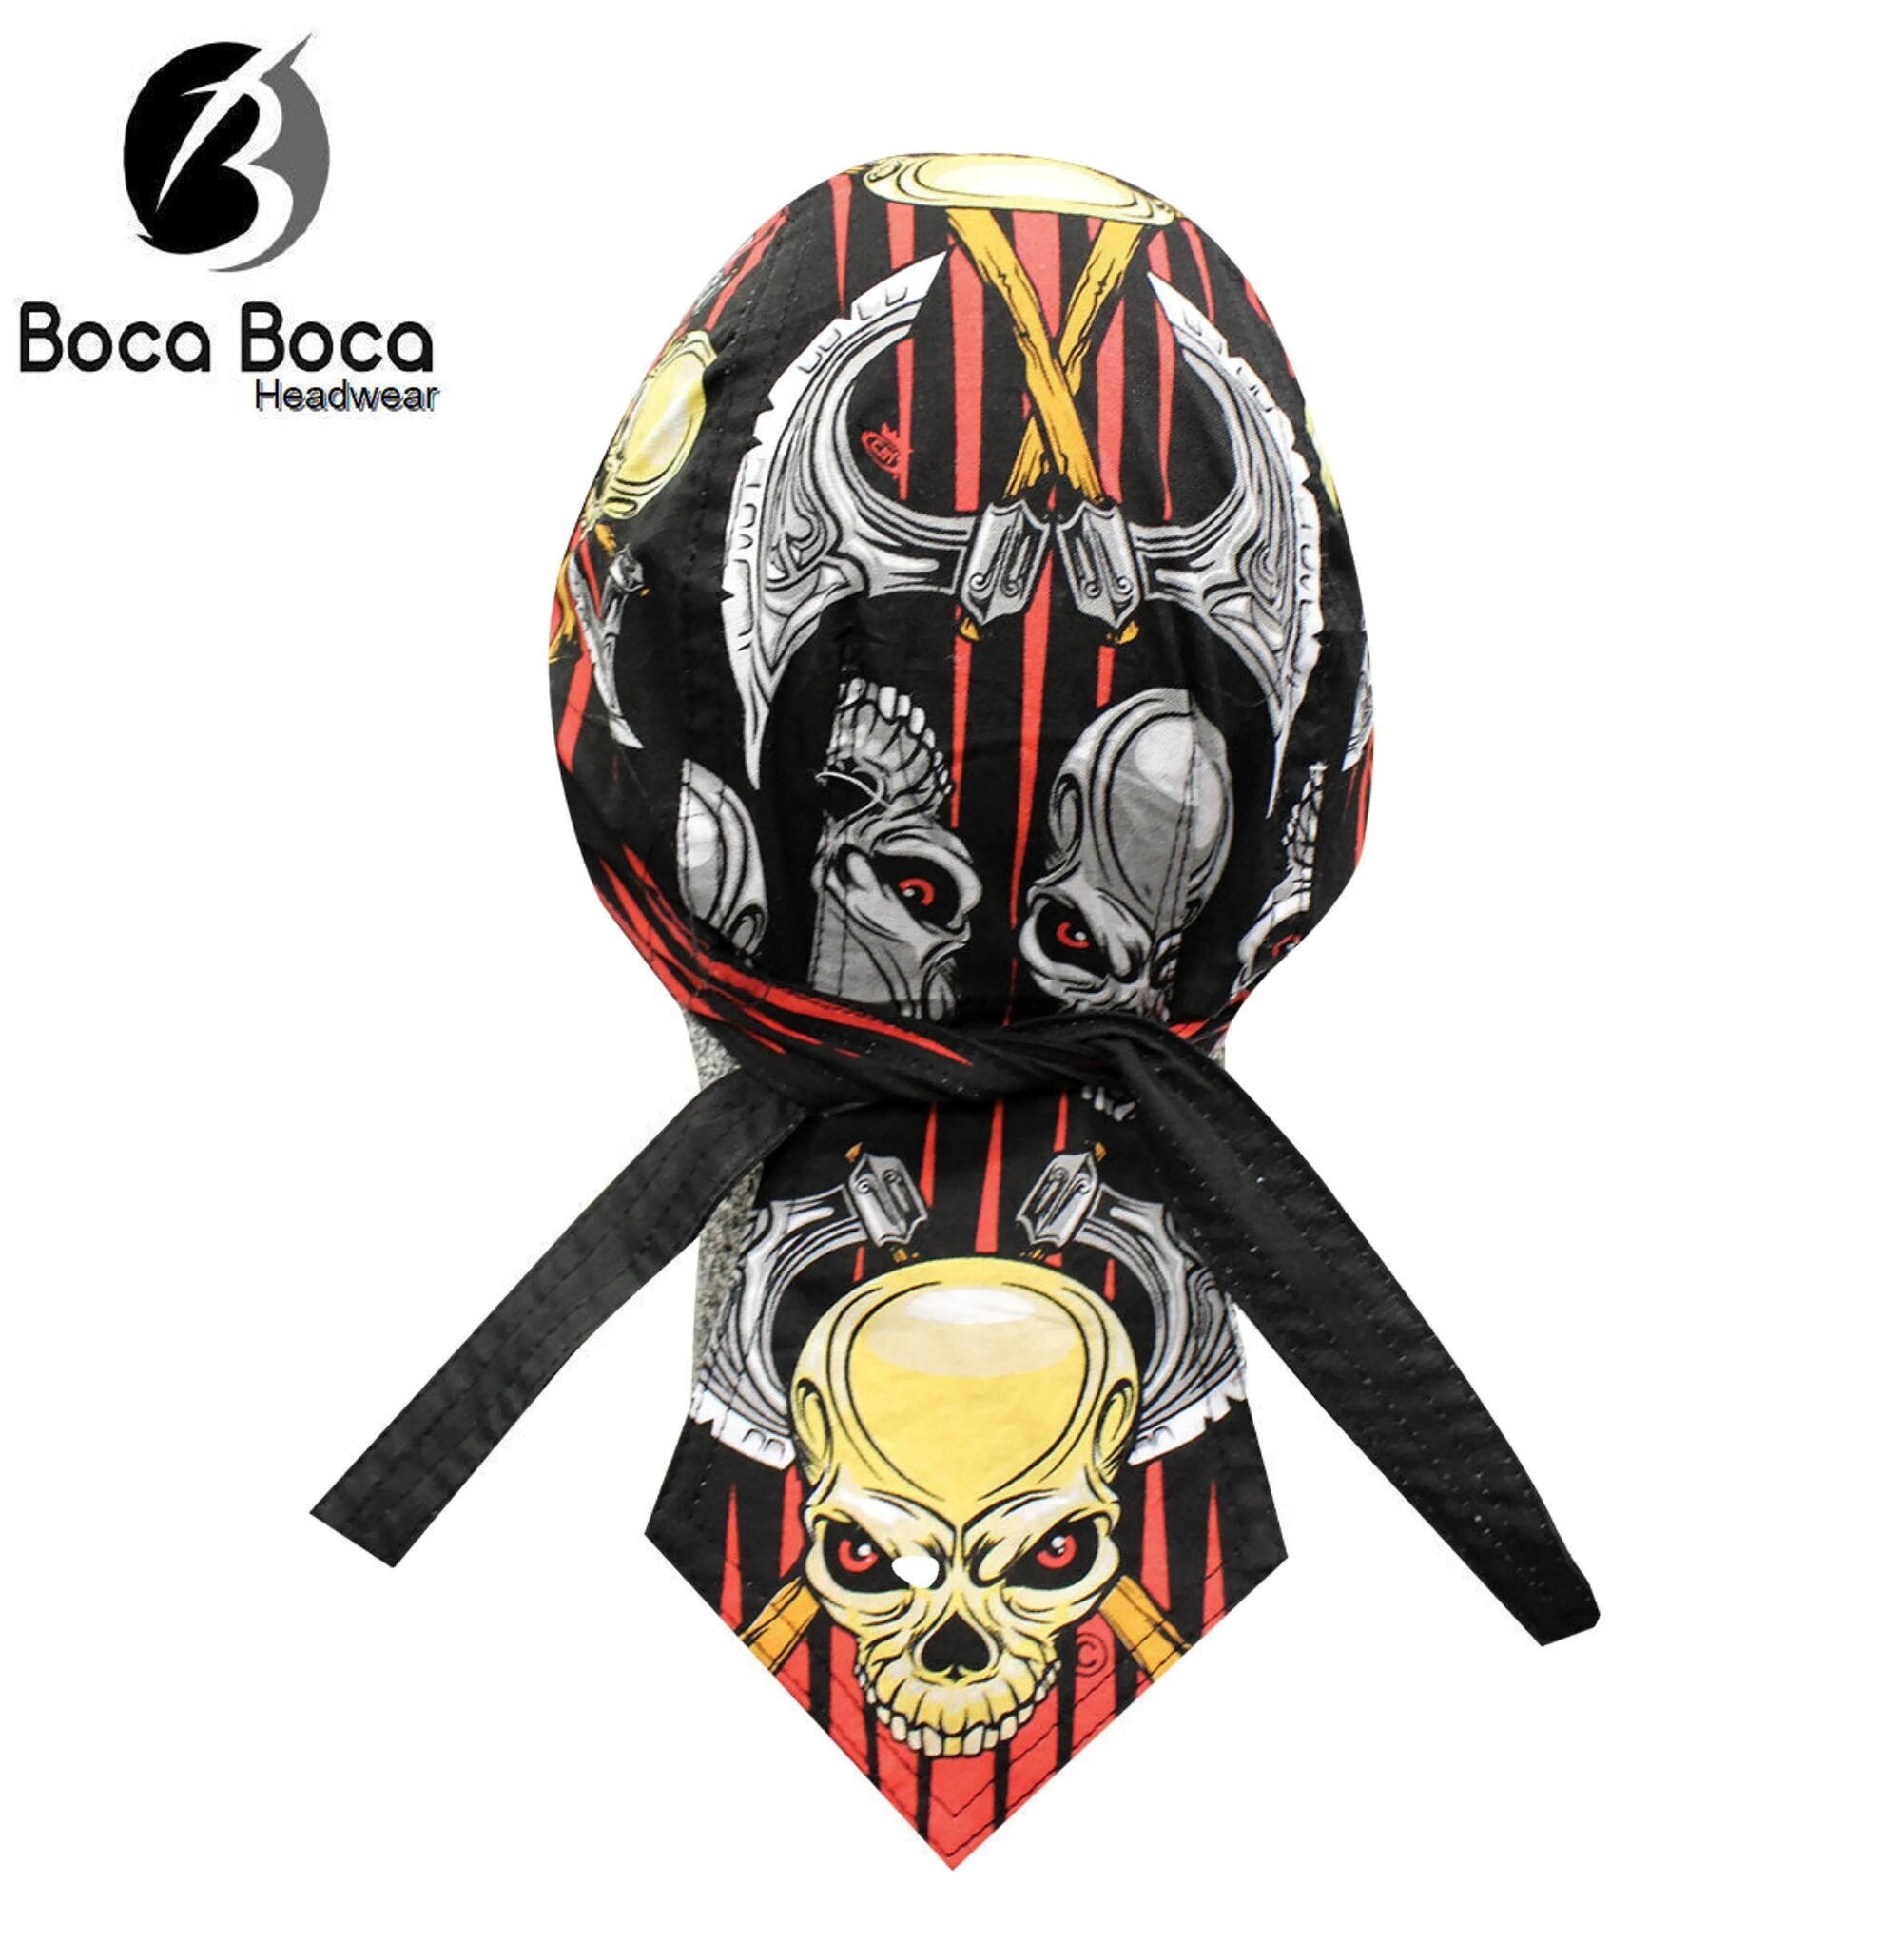 Yin Yang Durag Doo Rag Motorcycle Skull Cap Headwrap Biker Fun 